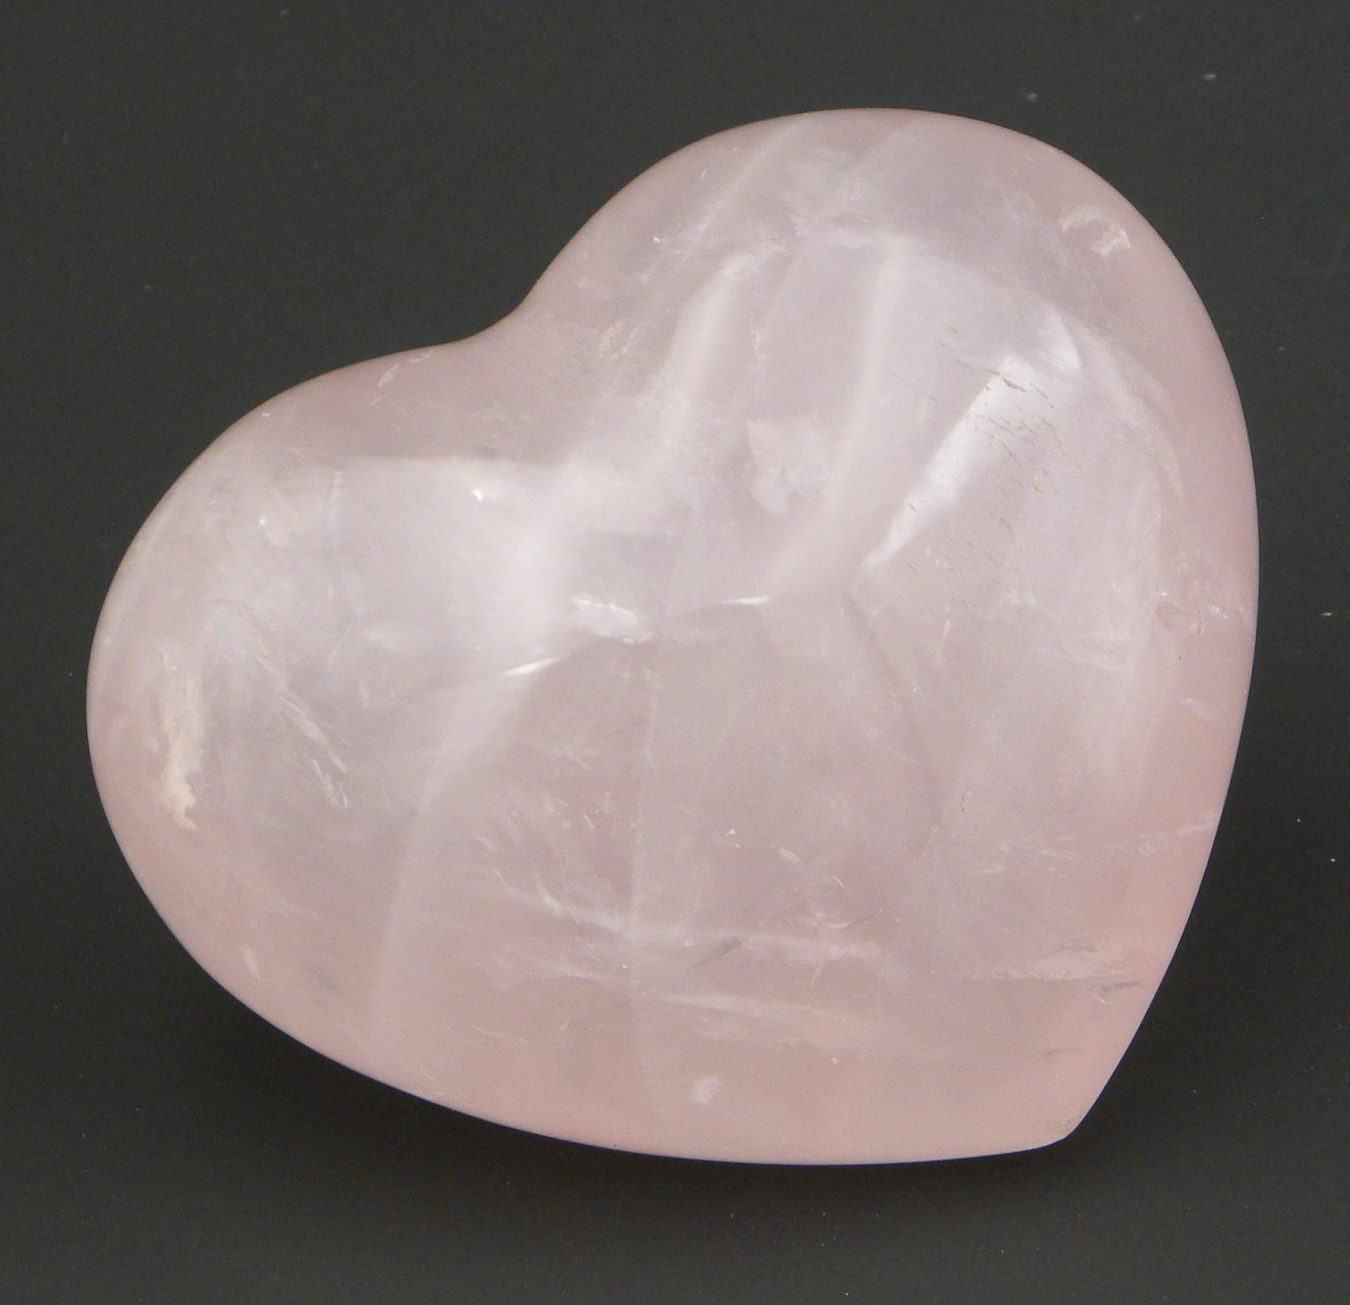 rode rose quartz heart meaning